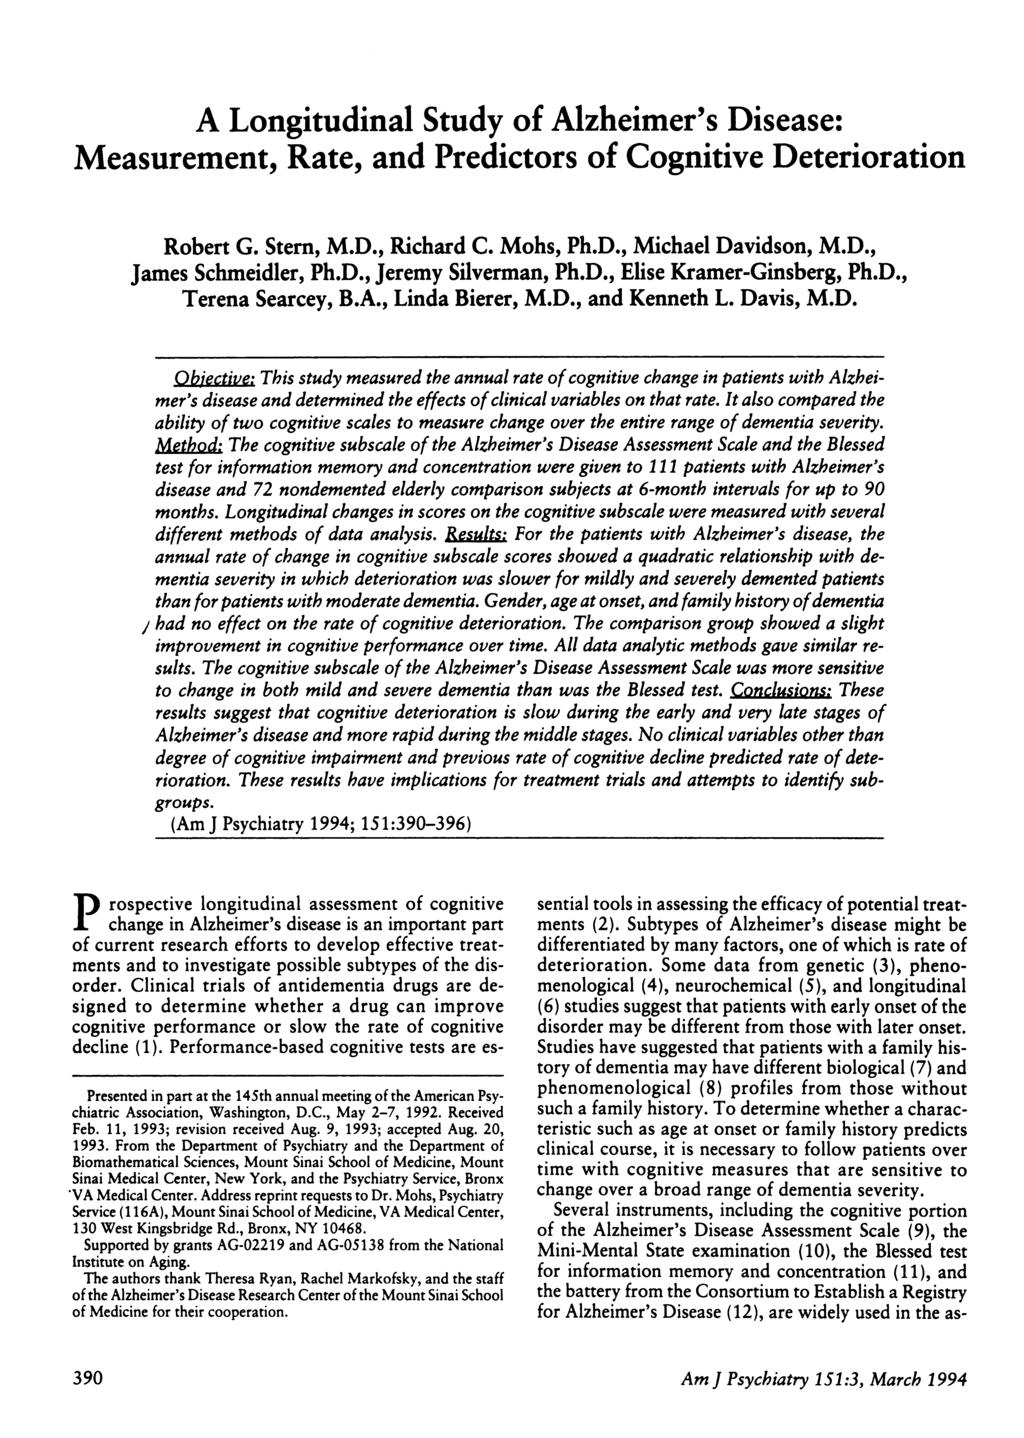 A Longitudinal Study of Alzheimer s Disease: Measurement, Rate, and Predictors of Cognitive Deterioration Robert G. Stem, M.D., Richard C. Mohs, Ph.D., Michael Davidson, M.D., James Schmeidler, Ph.D., Jeremy Silverman, Ph.